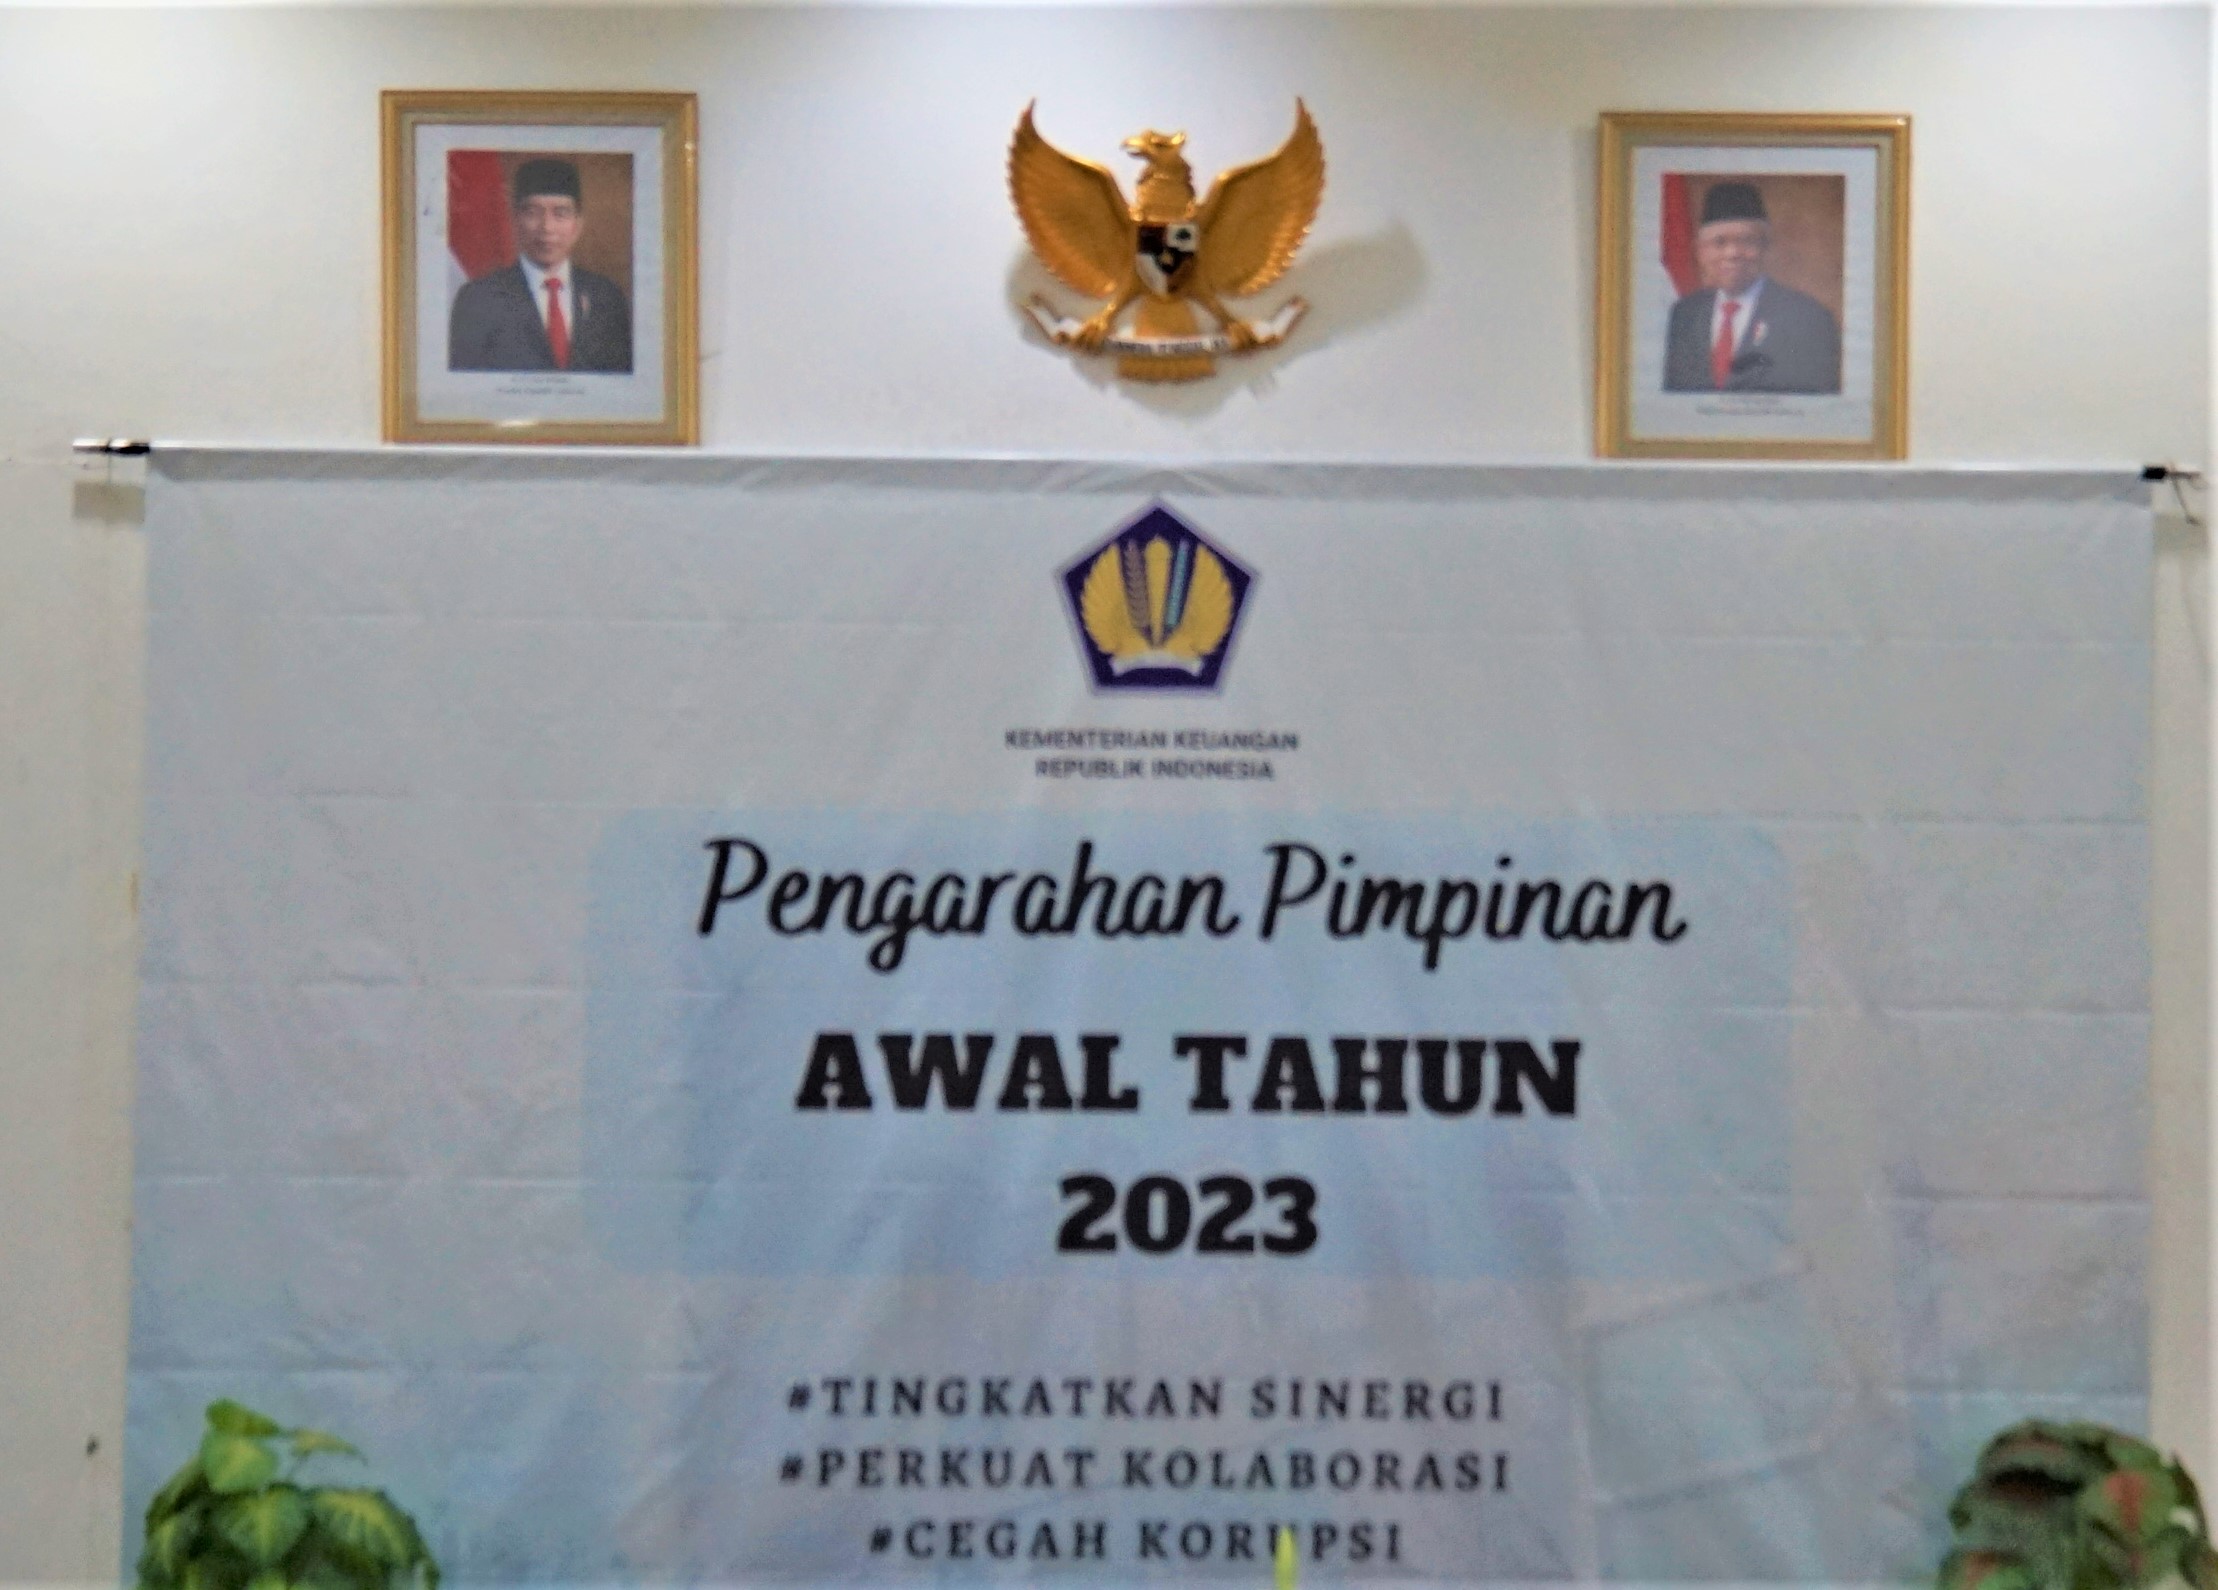 Pengarahan Pimpinan Awal Tahun 2023 Kanwil DJKN DKI Jakarta